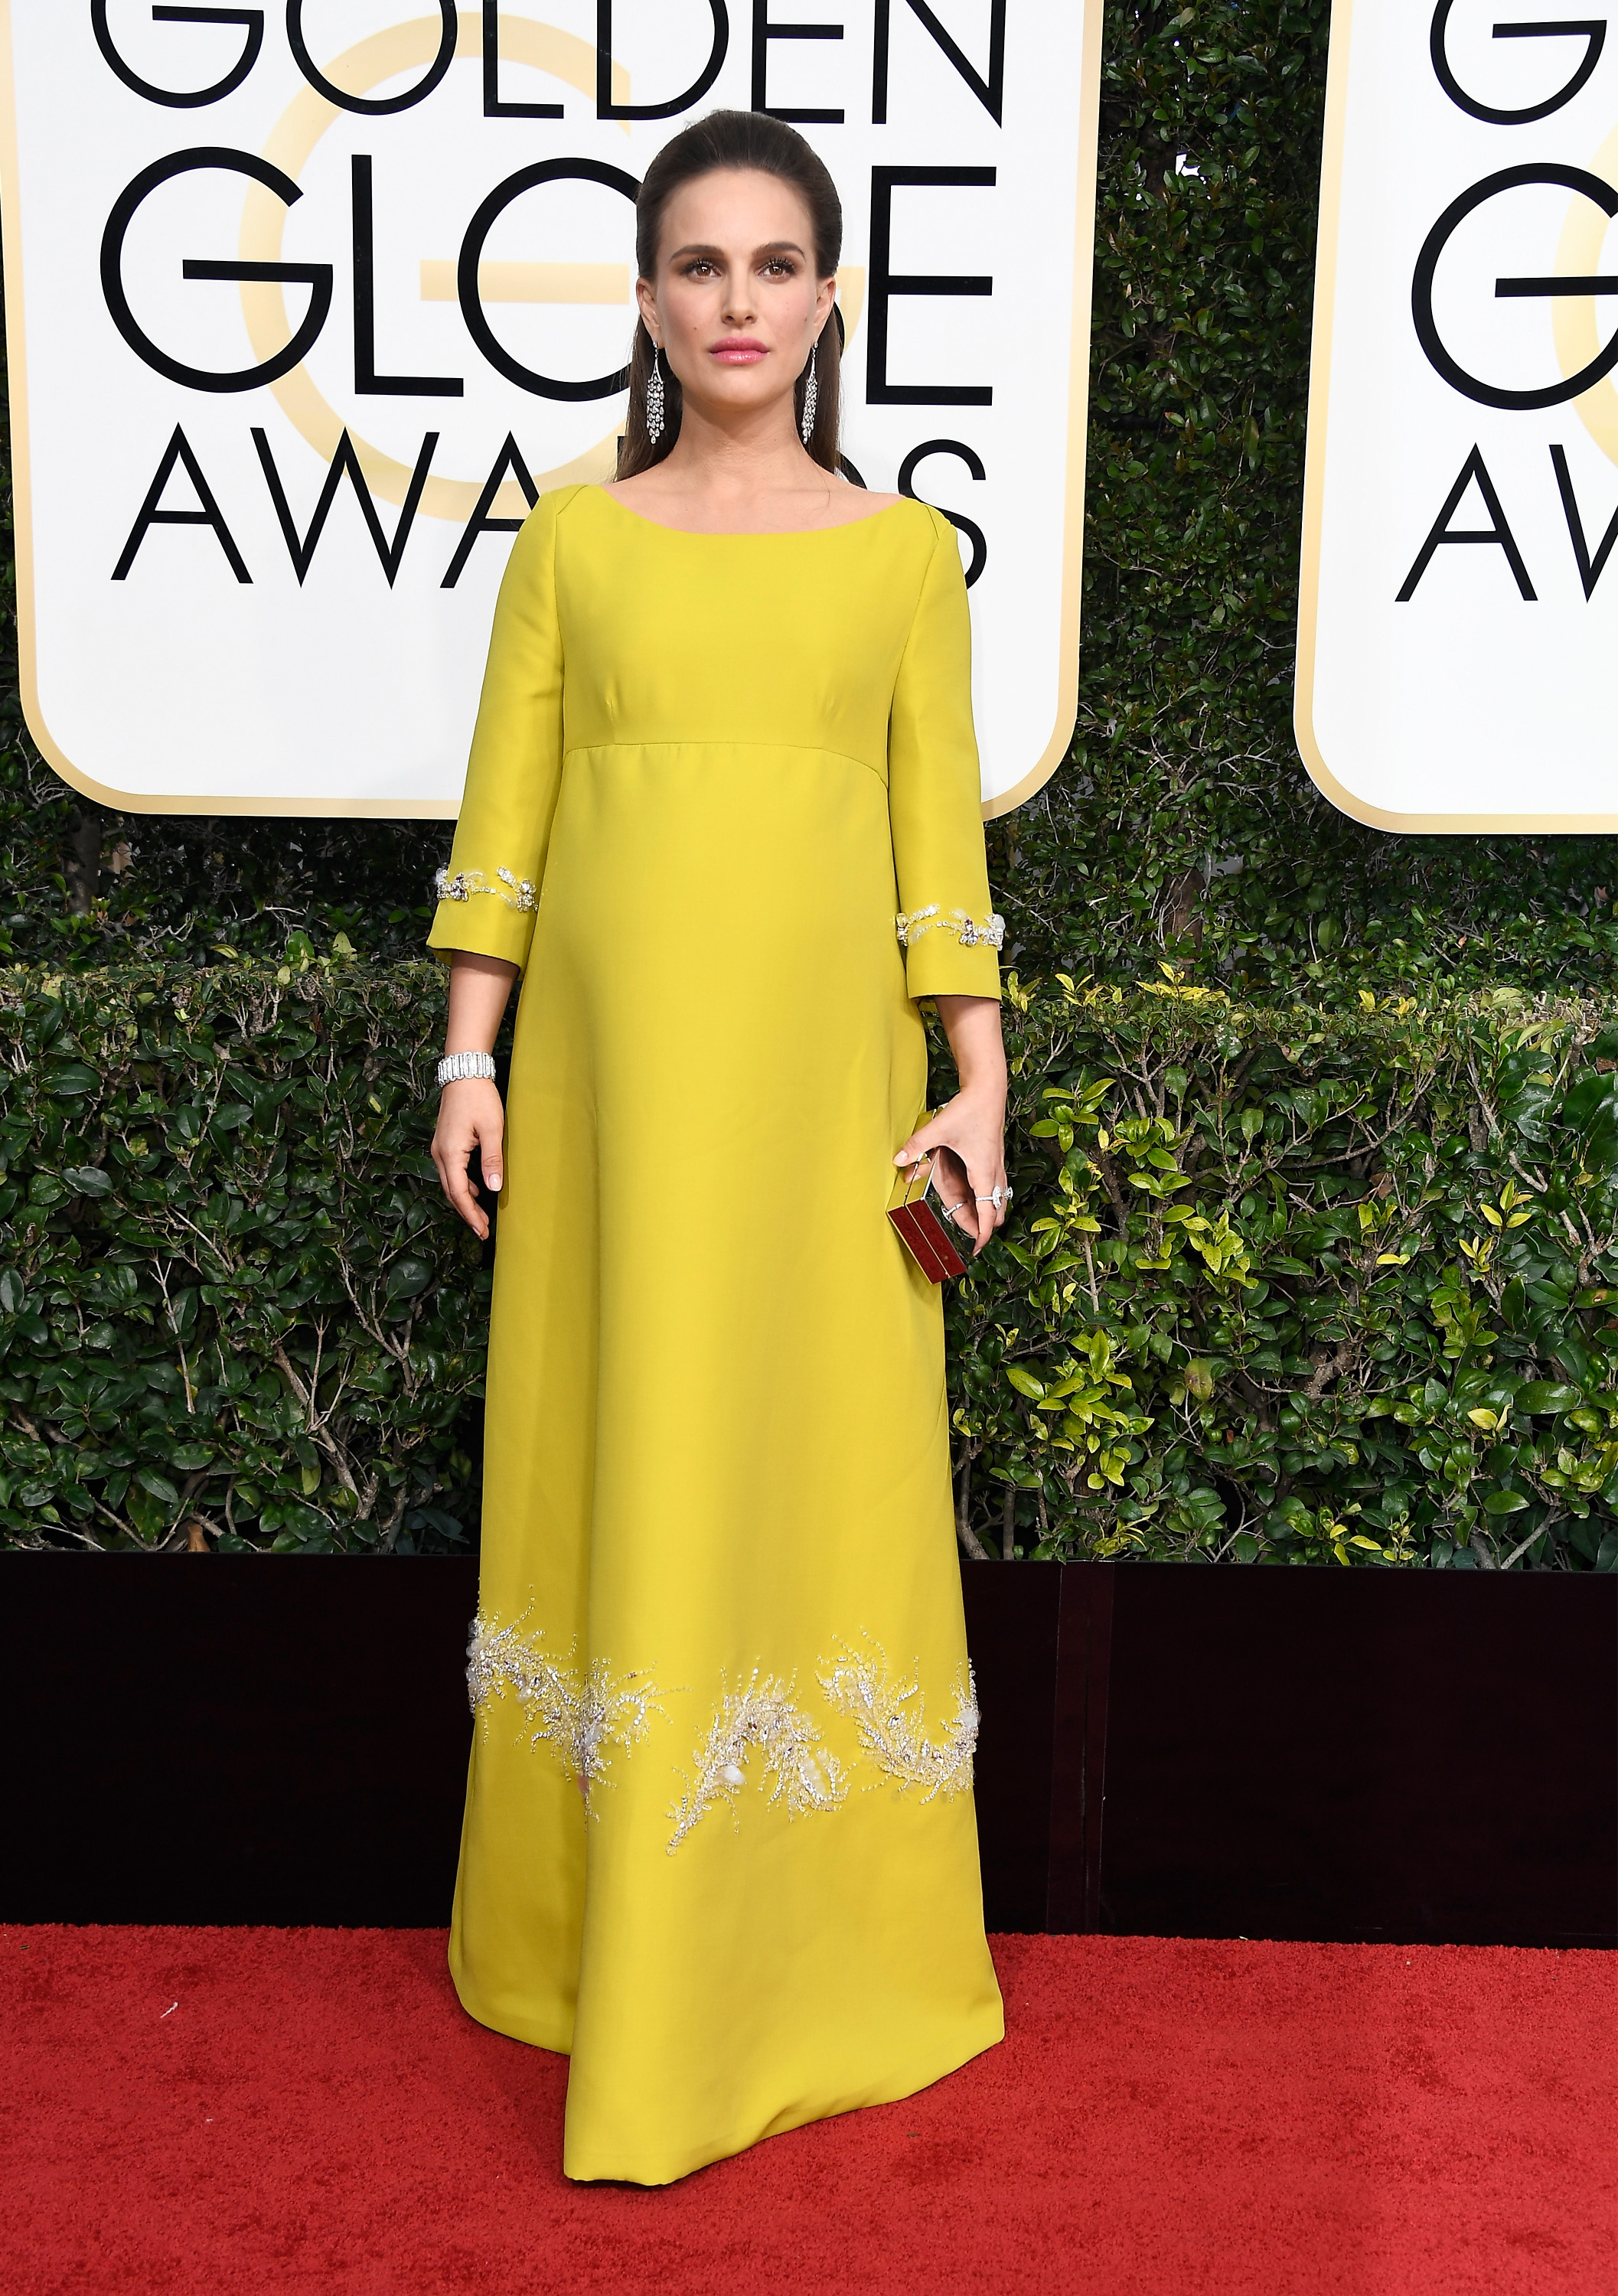 Emma Stone's Valentino Dress at Golden Globe Awards 2017